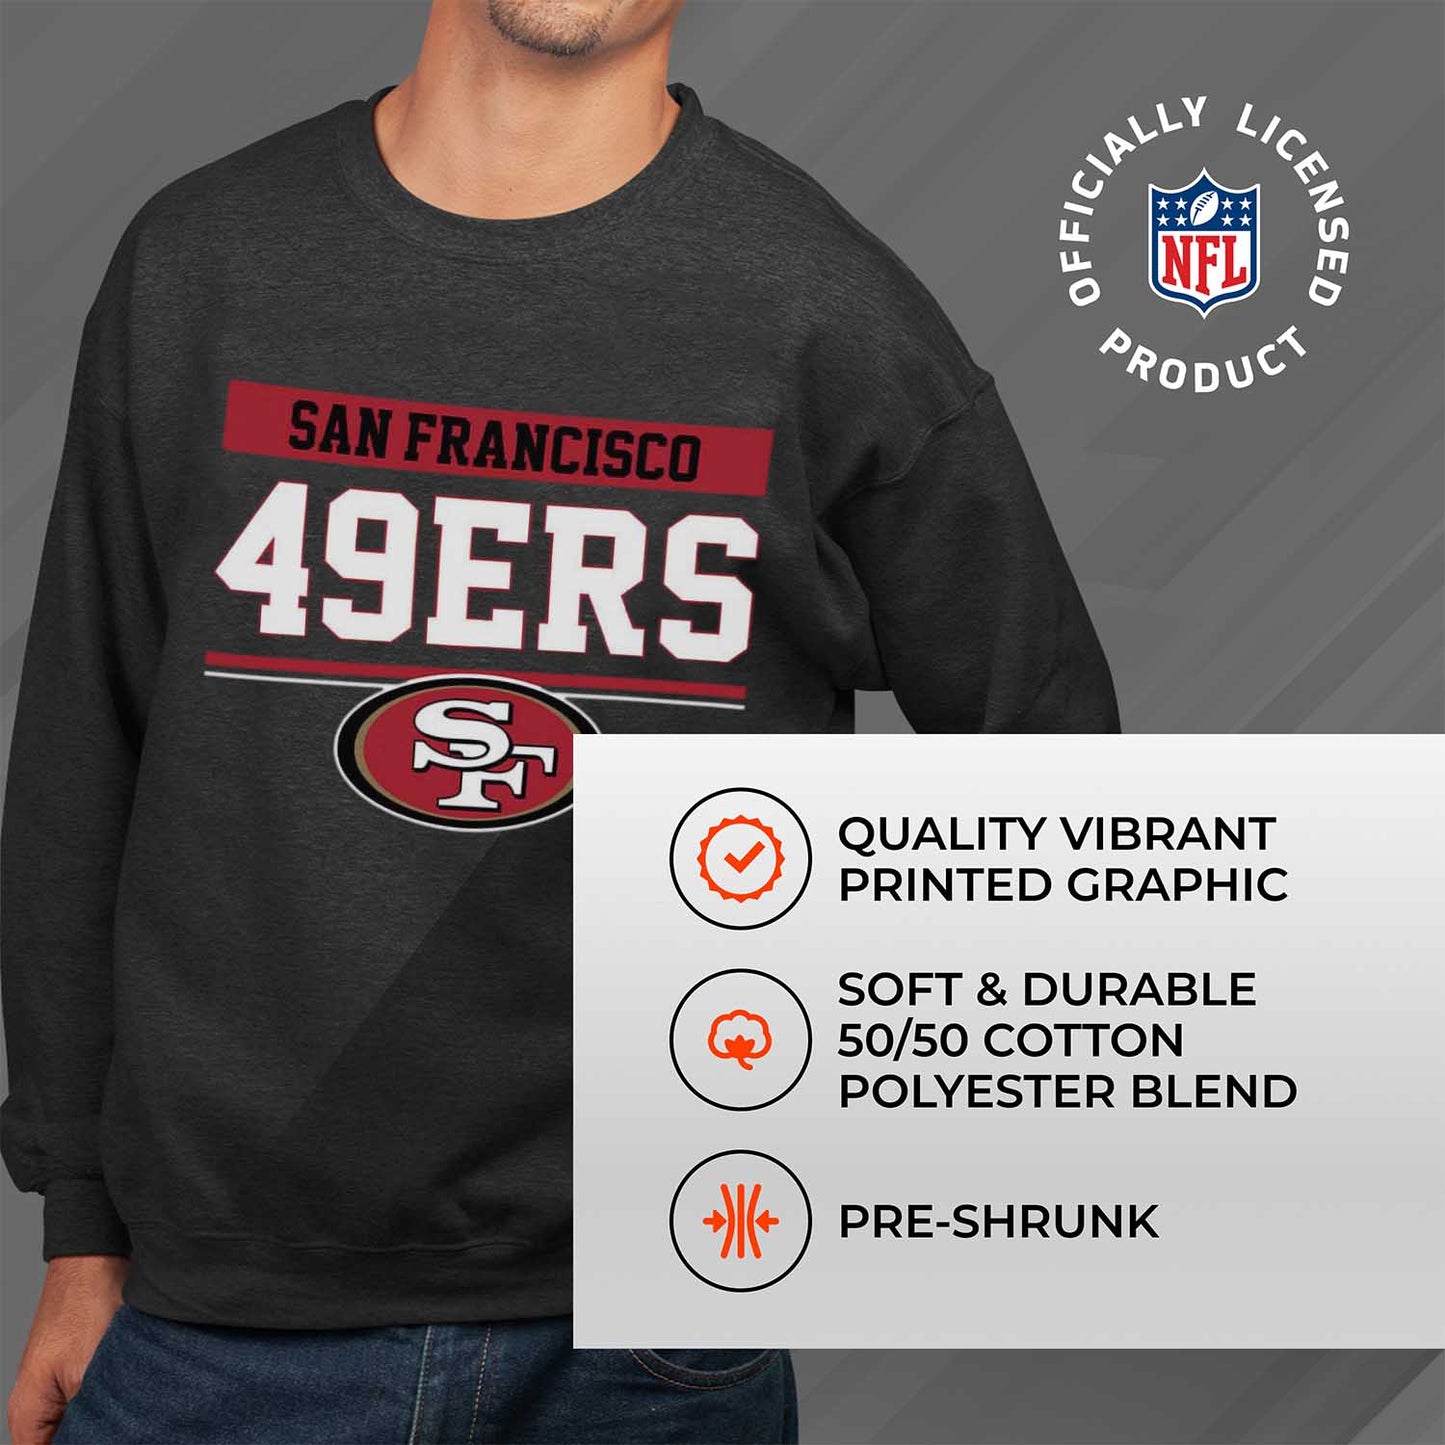 San Francisco 49ers NFL Adult Long Sleeve Team Block Charcoal Crewneck Sweatshirt - Charcoal